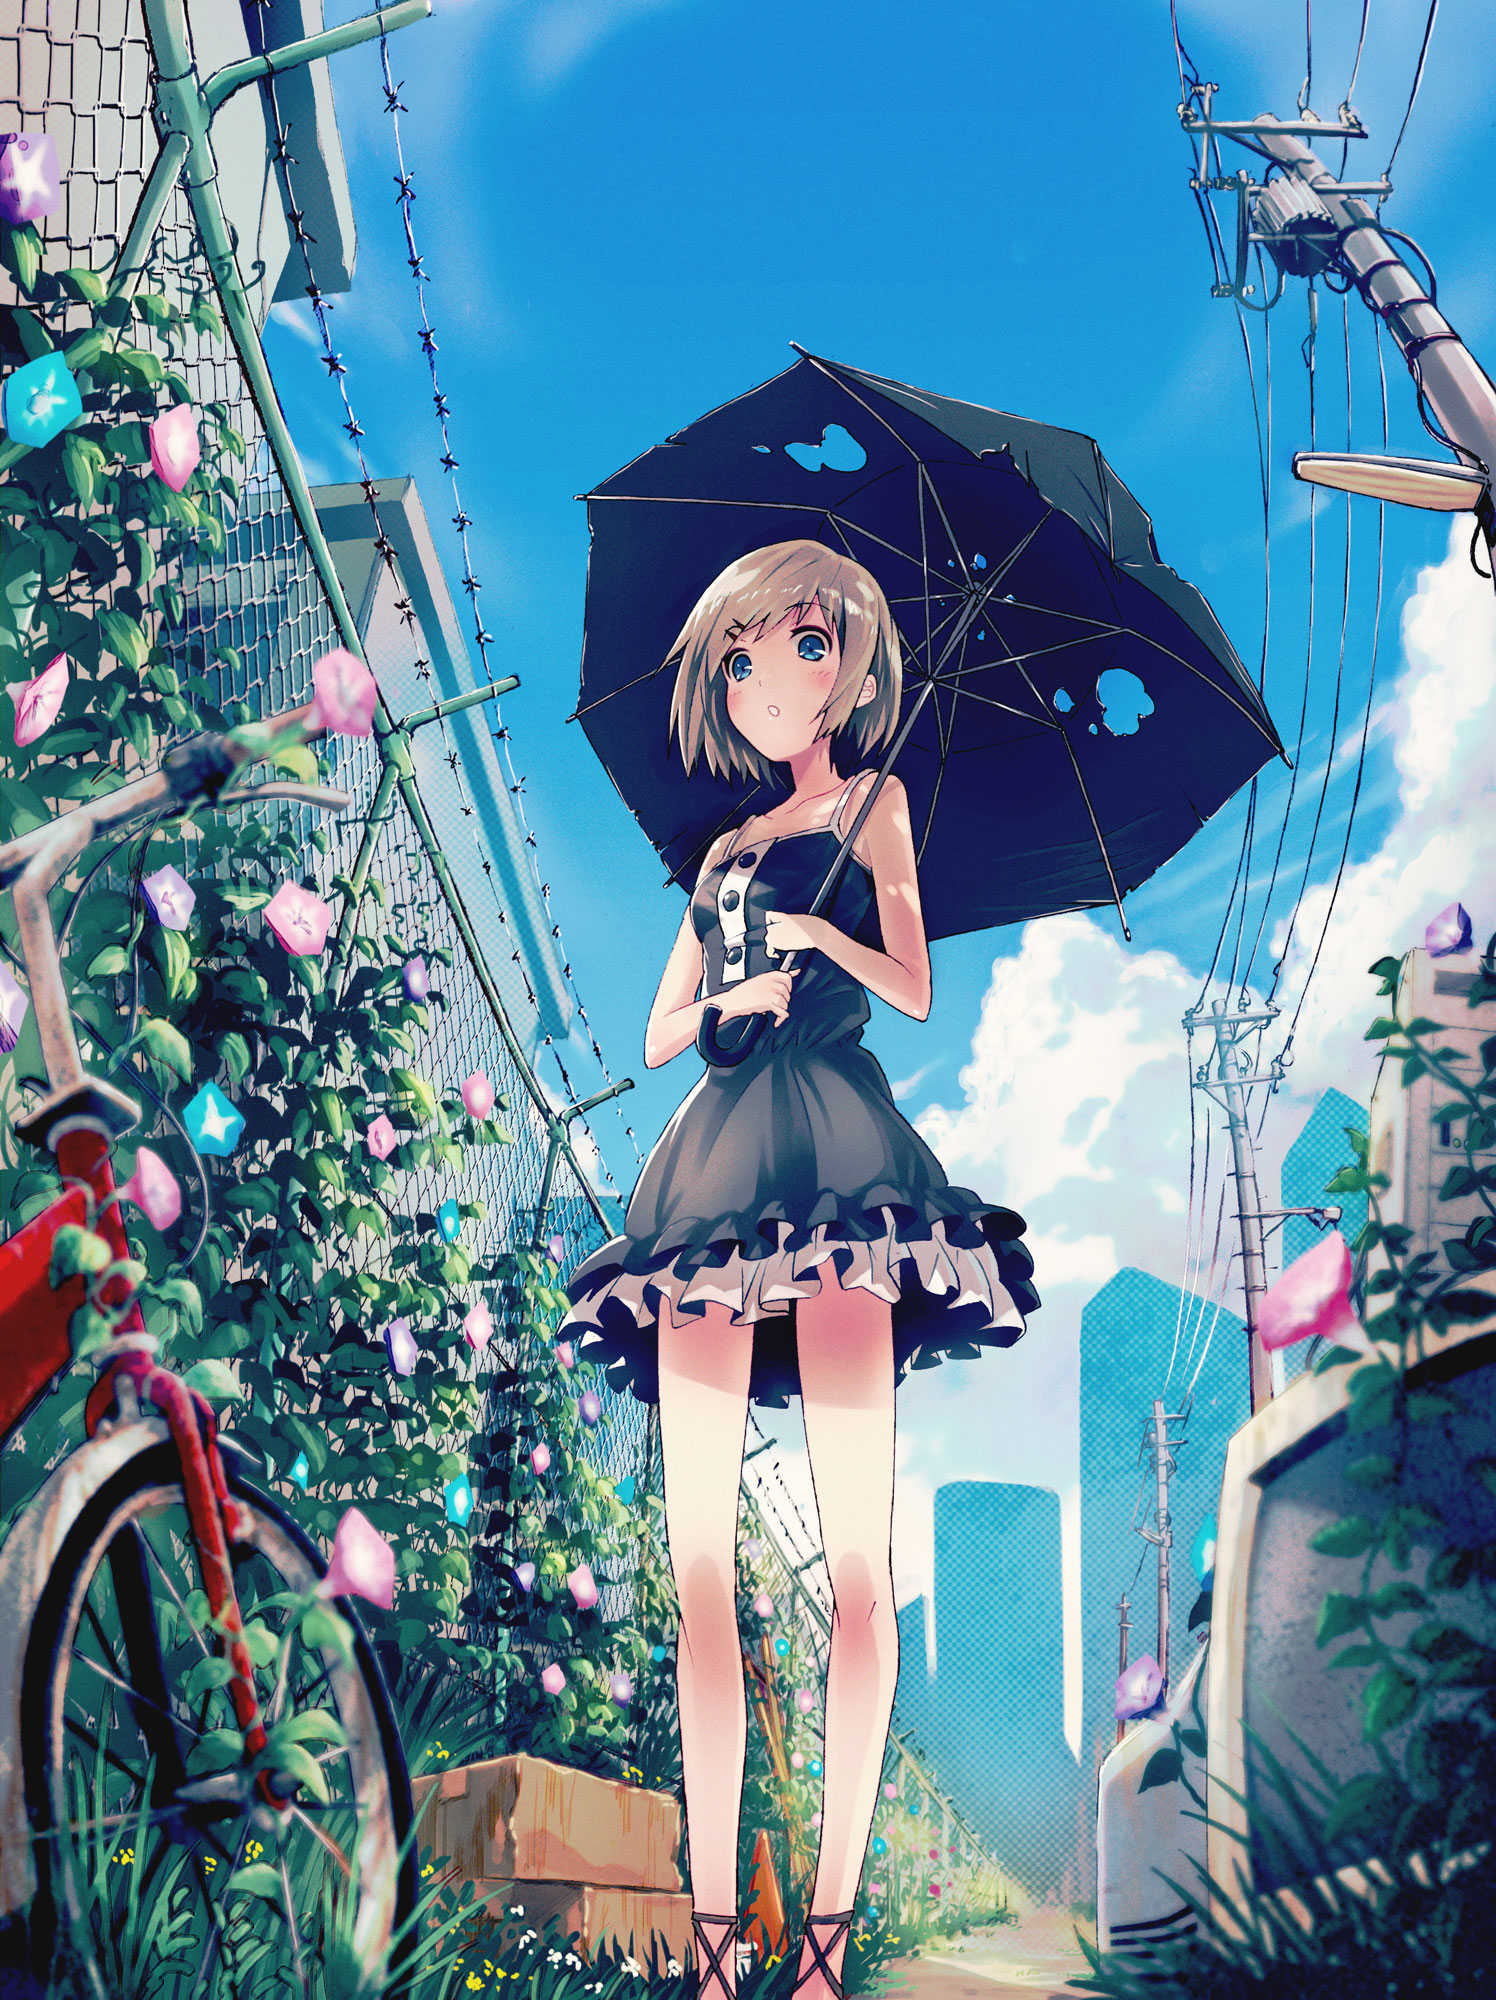 Anime 1496x2000 anime anime girls umbrella dress legs bicycle sky urban flowers